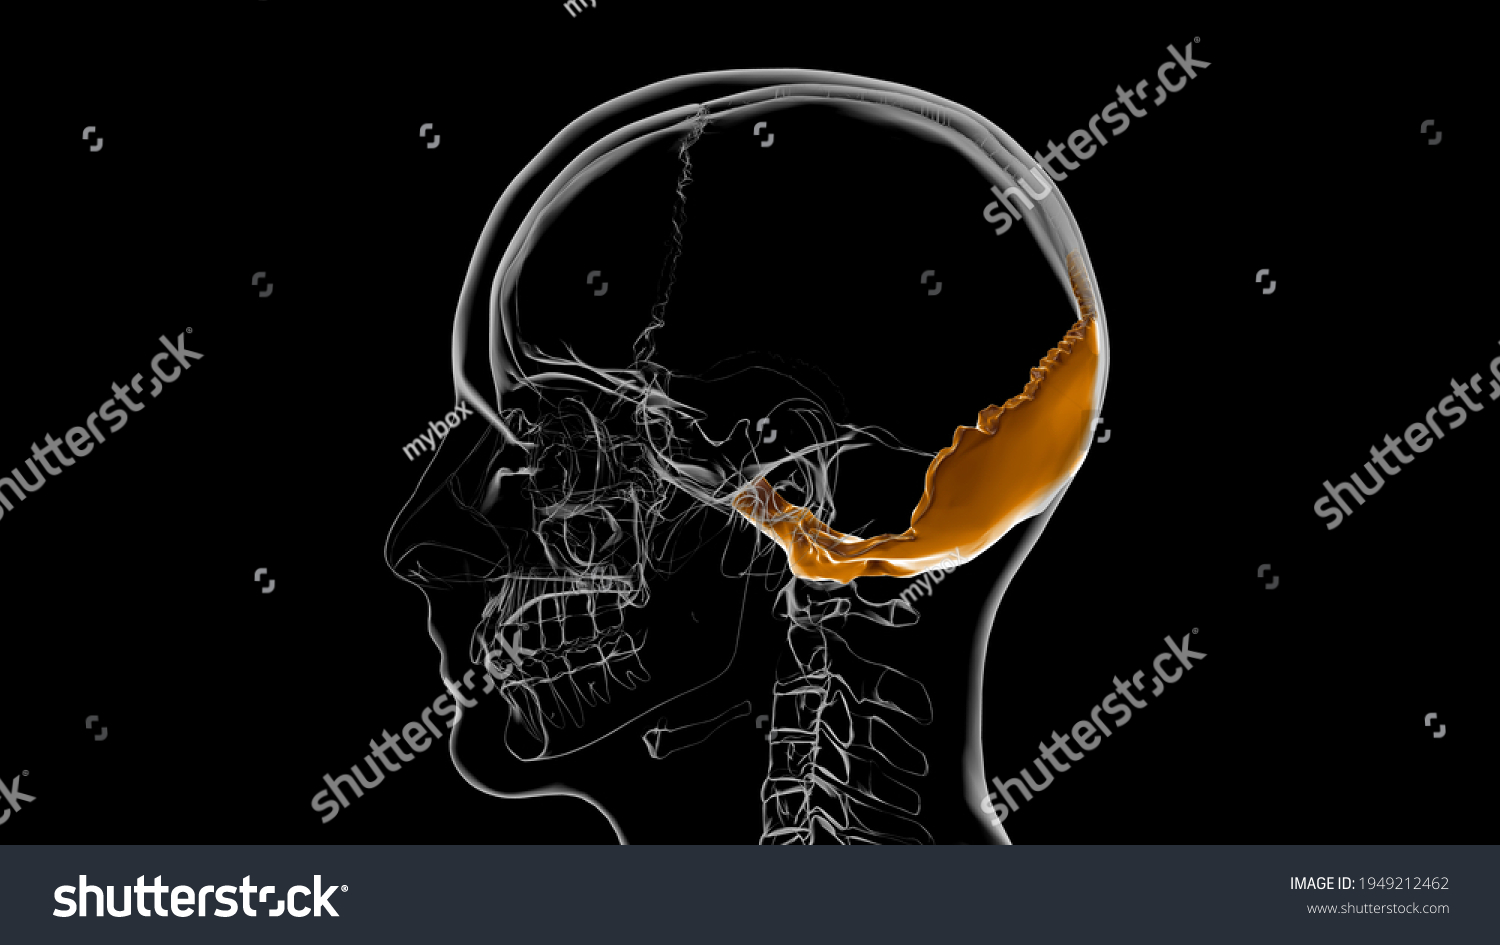 Human Skeleton Skull Occipital Bone Anatomy Stock Illustration 1949212462 Shutterstock 3644